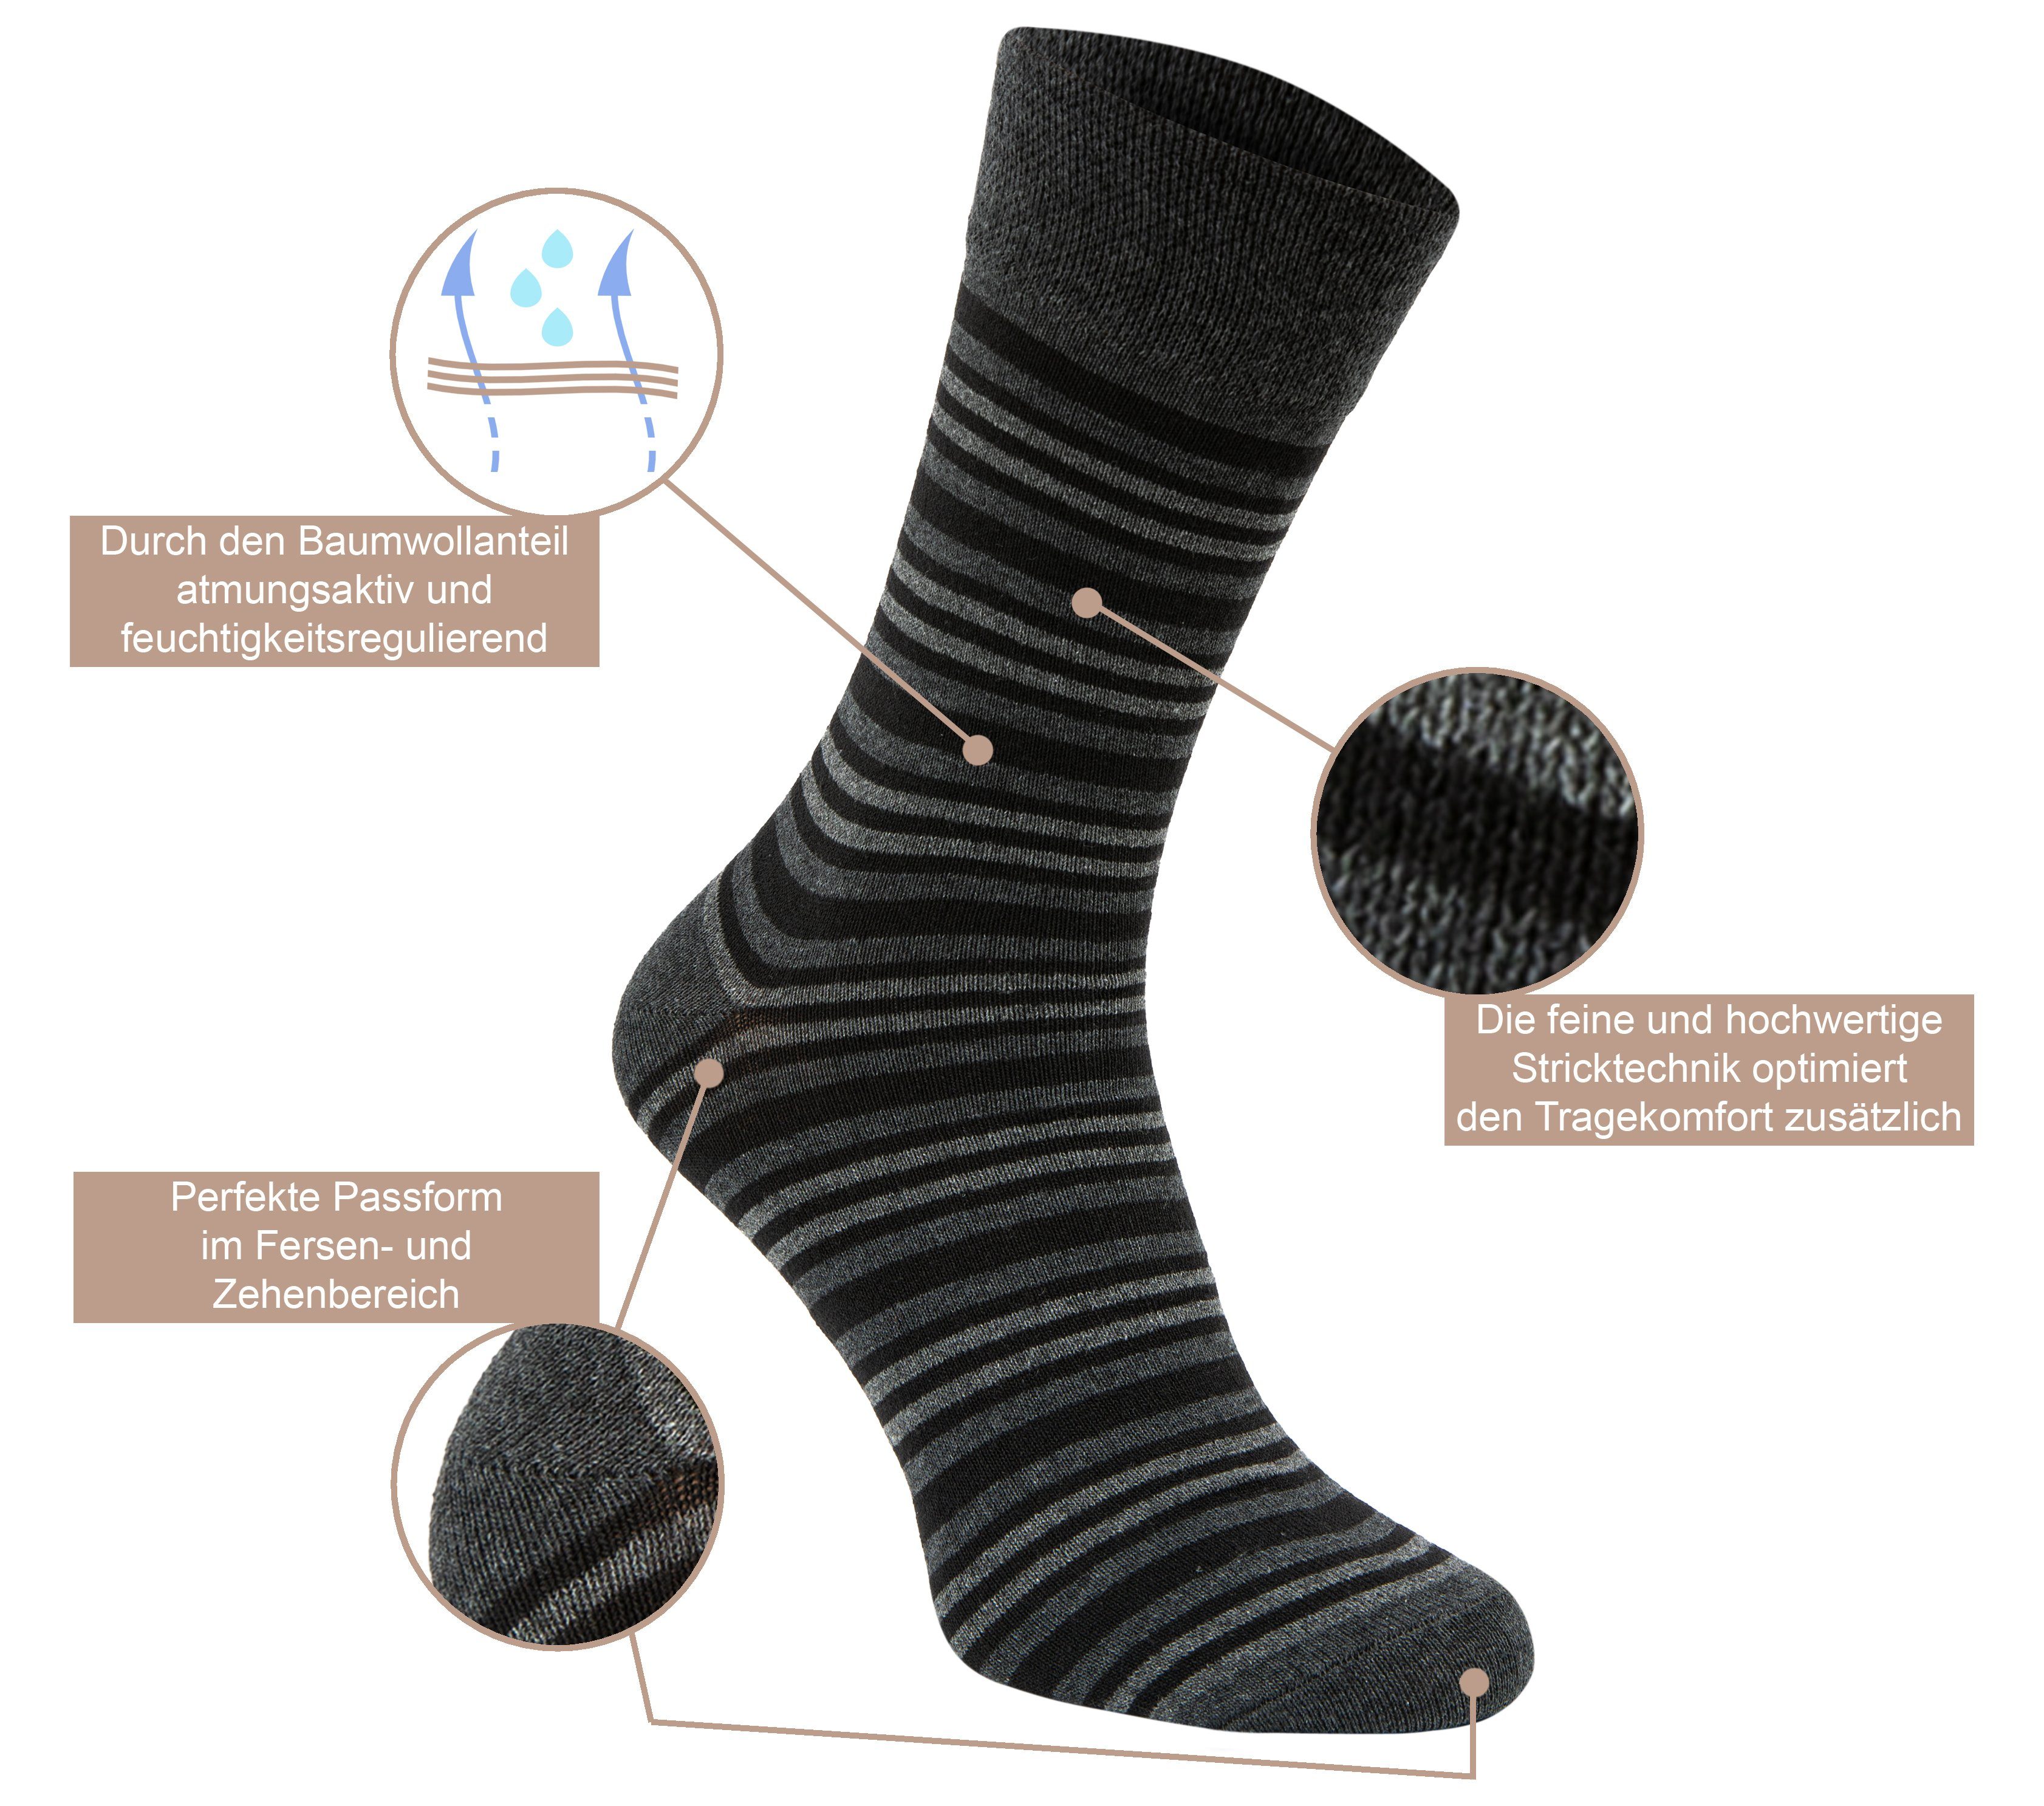 Paolo Renzo Businesssocken (10-Paar) Atmungsaktive Herren hochwertiger Business Socken Baumwolle aus